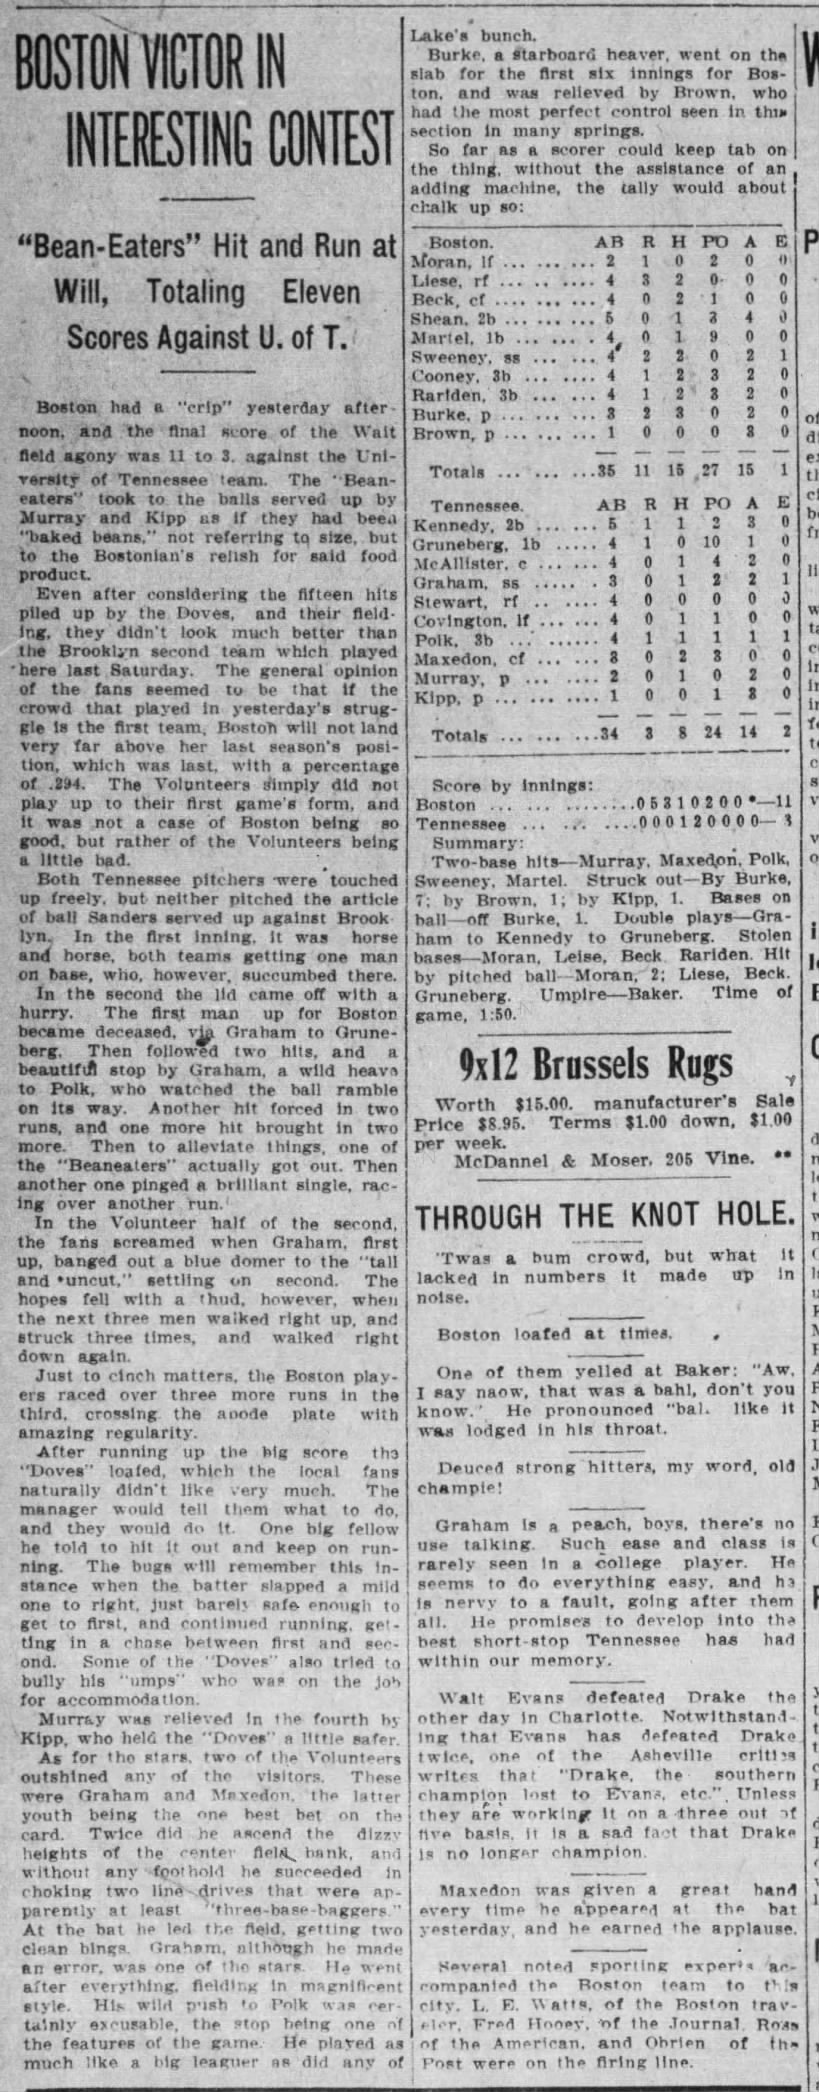 1910 - Boston defeats UT, 11-3, in exhibition match